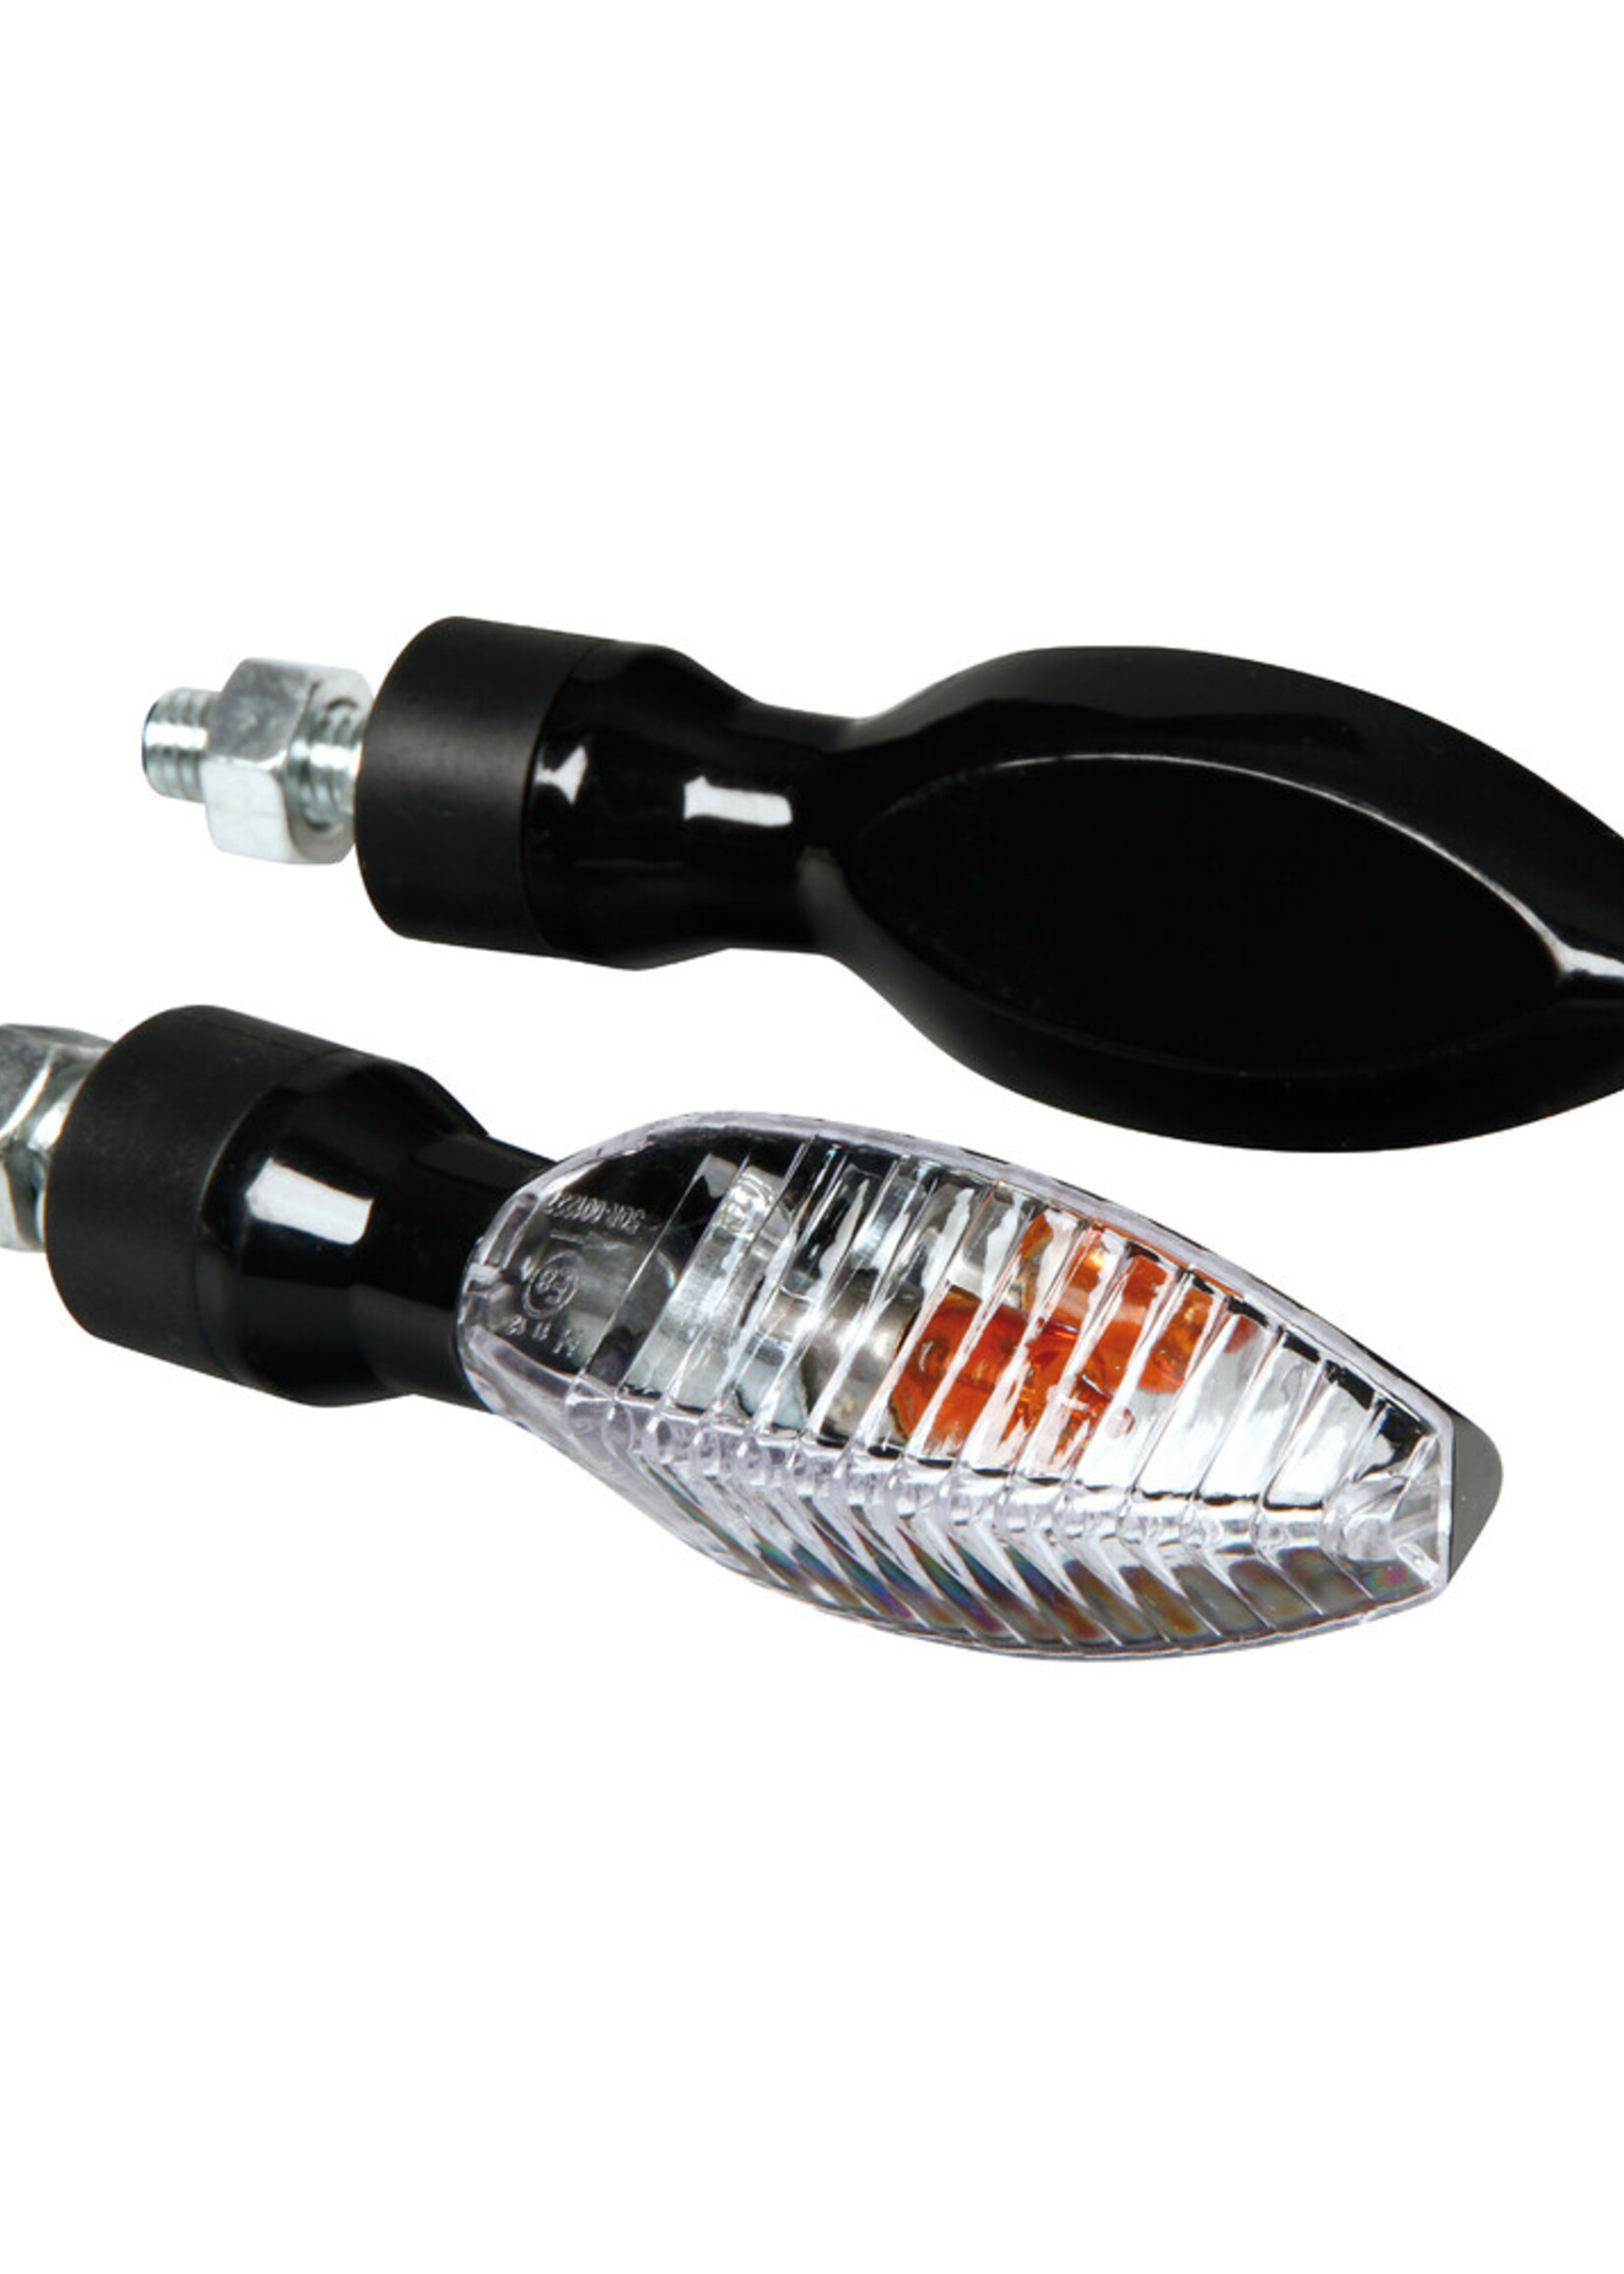 Lampa Kinesis, bulbs corner lights - 10W - Black